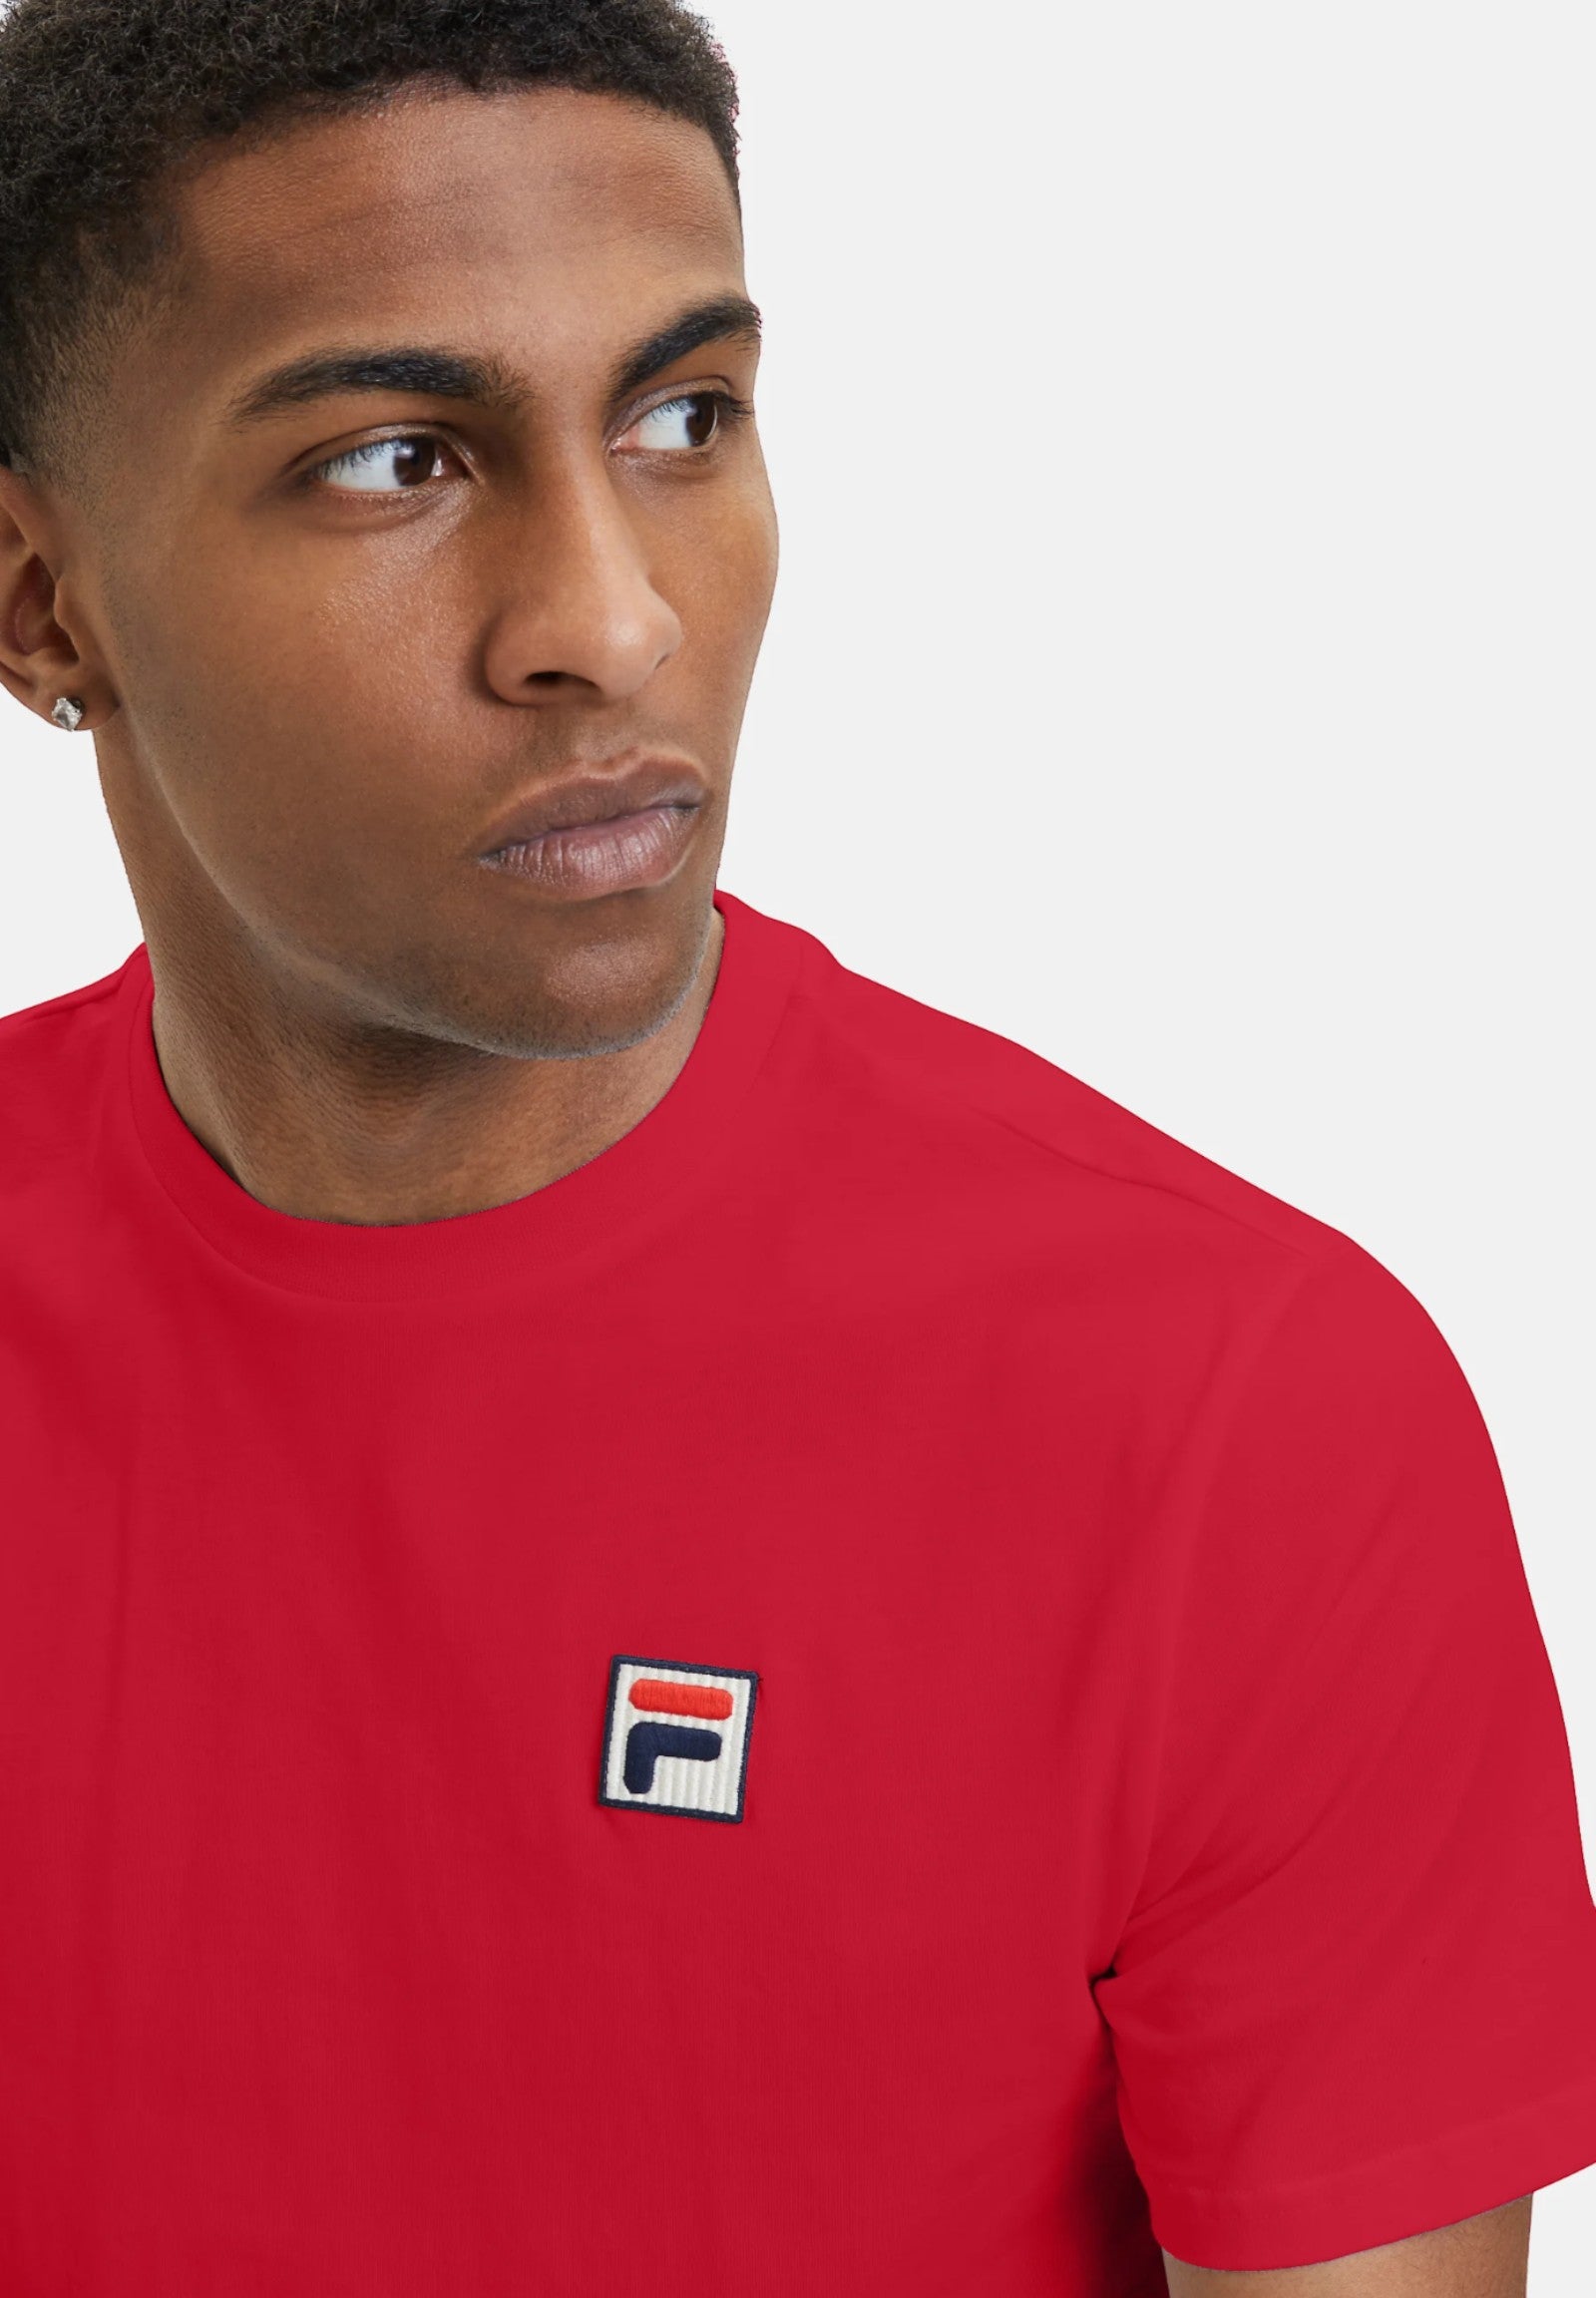 Fila T-Shirt* Fam0616 True Red